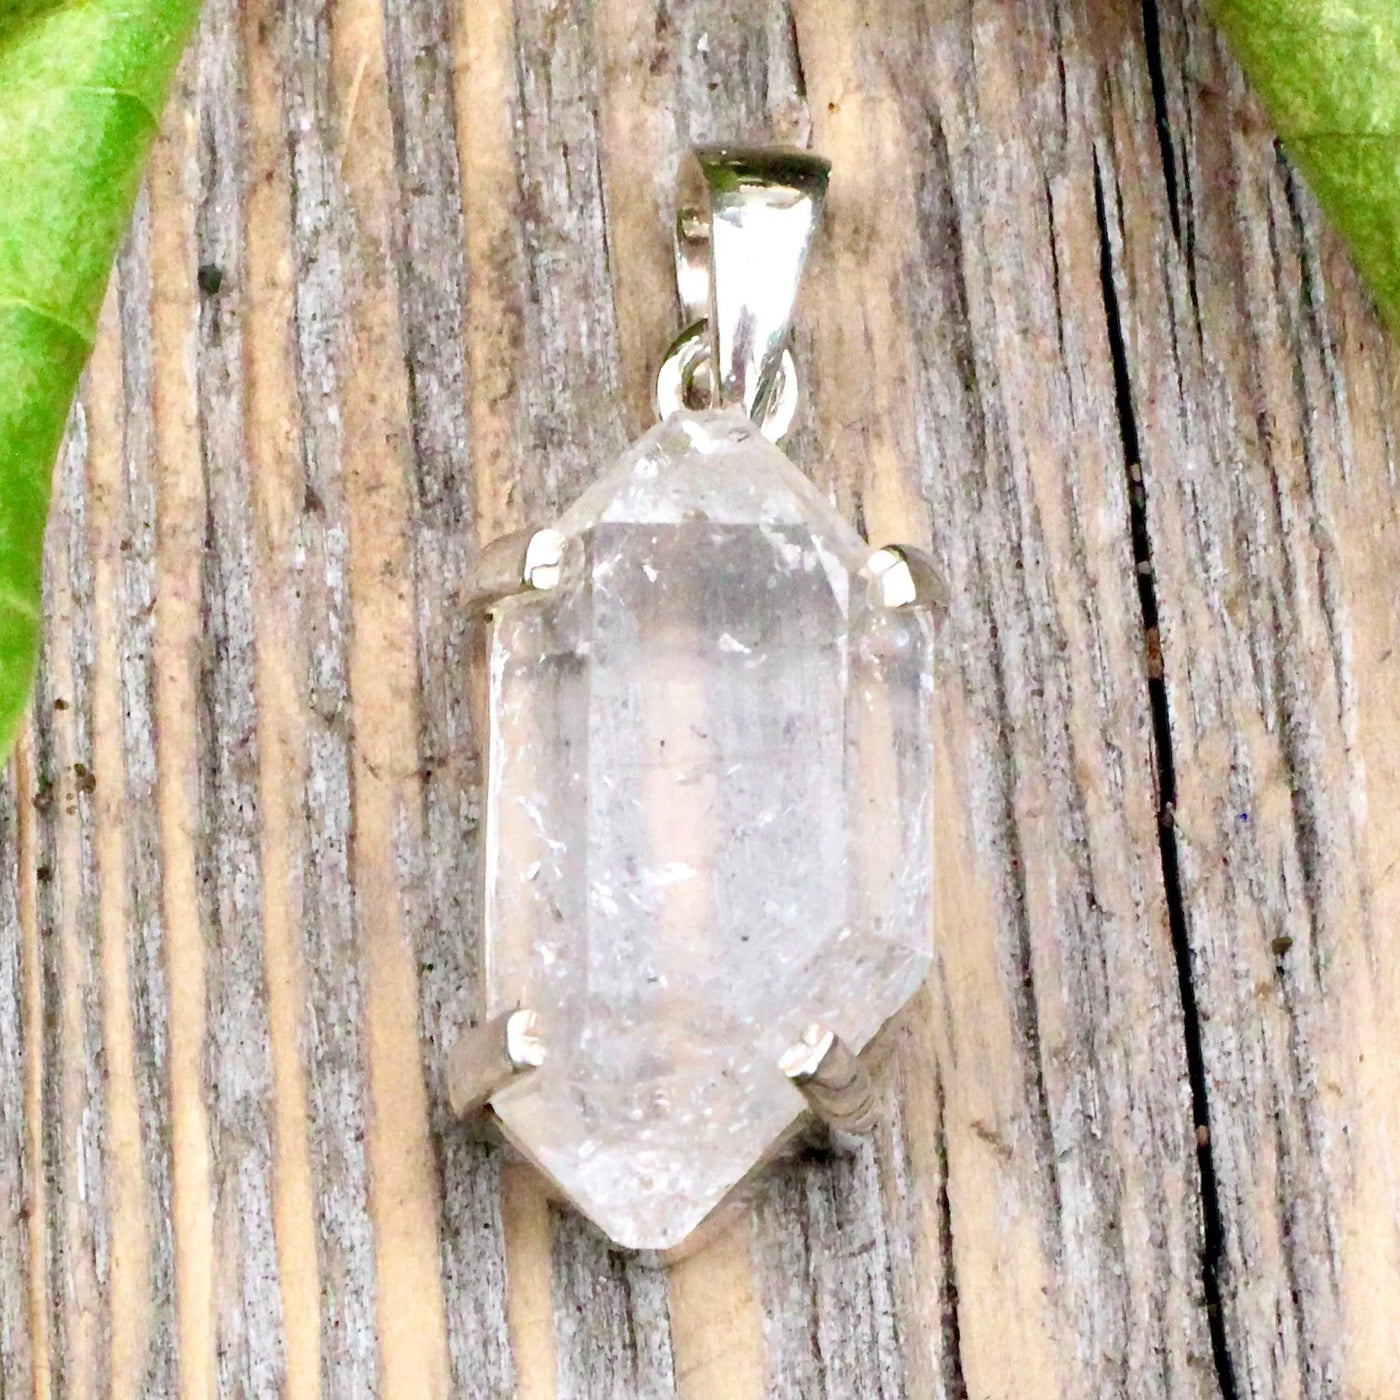 Herkimer Diamond Pendant in Sterling Silver